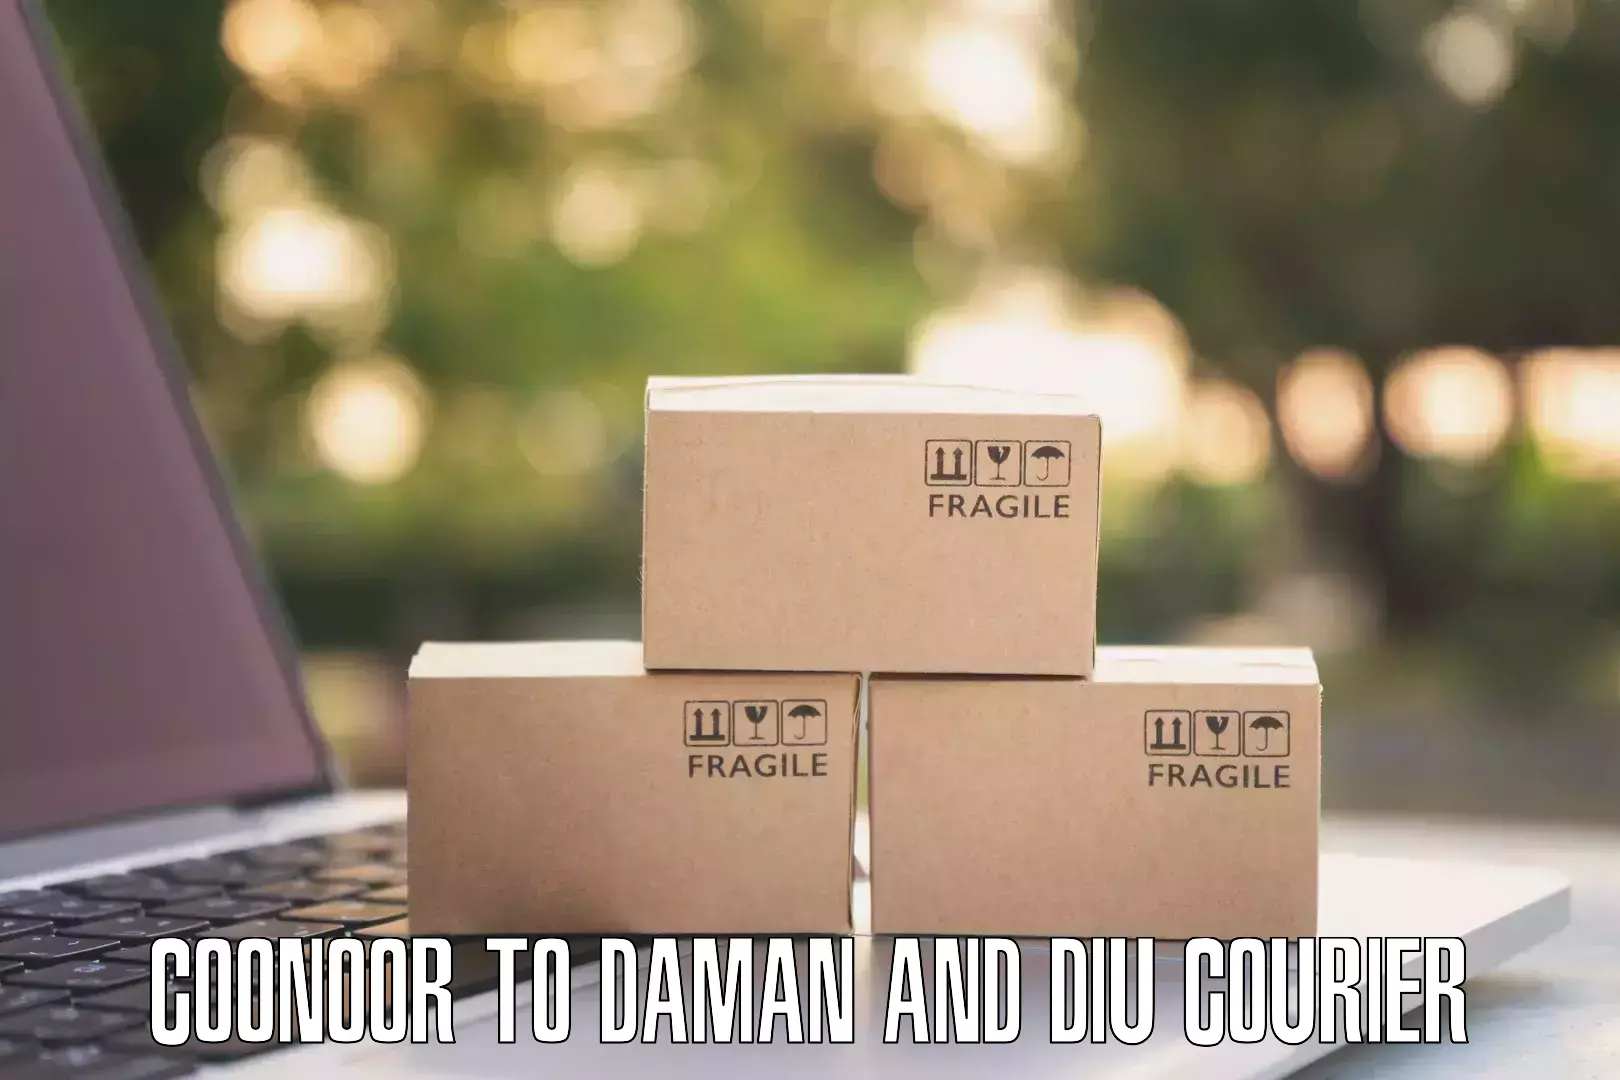 Enhanced shipping experience Coonoor to Diu